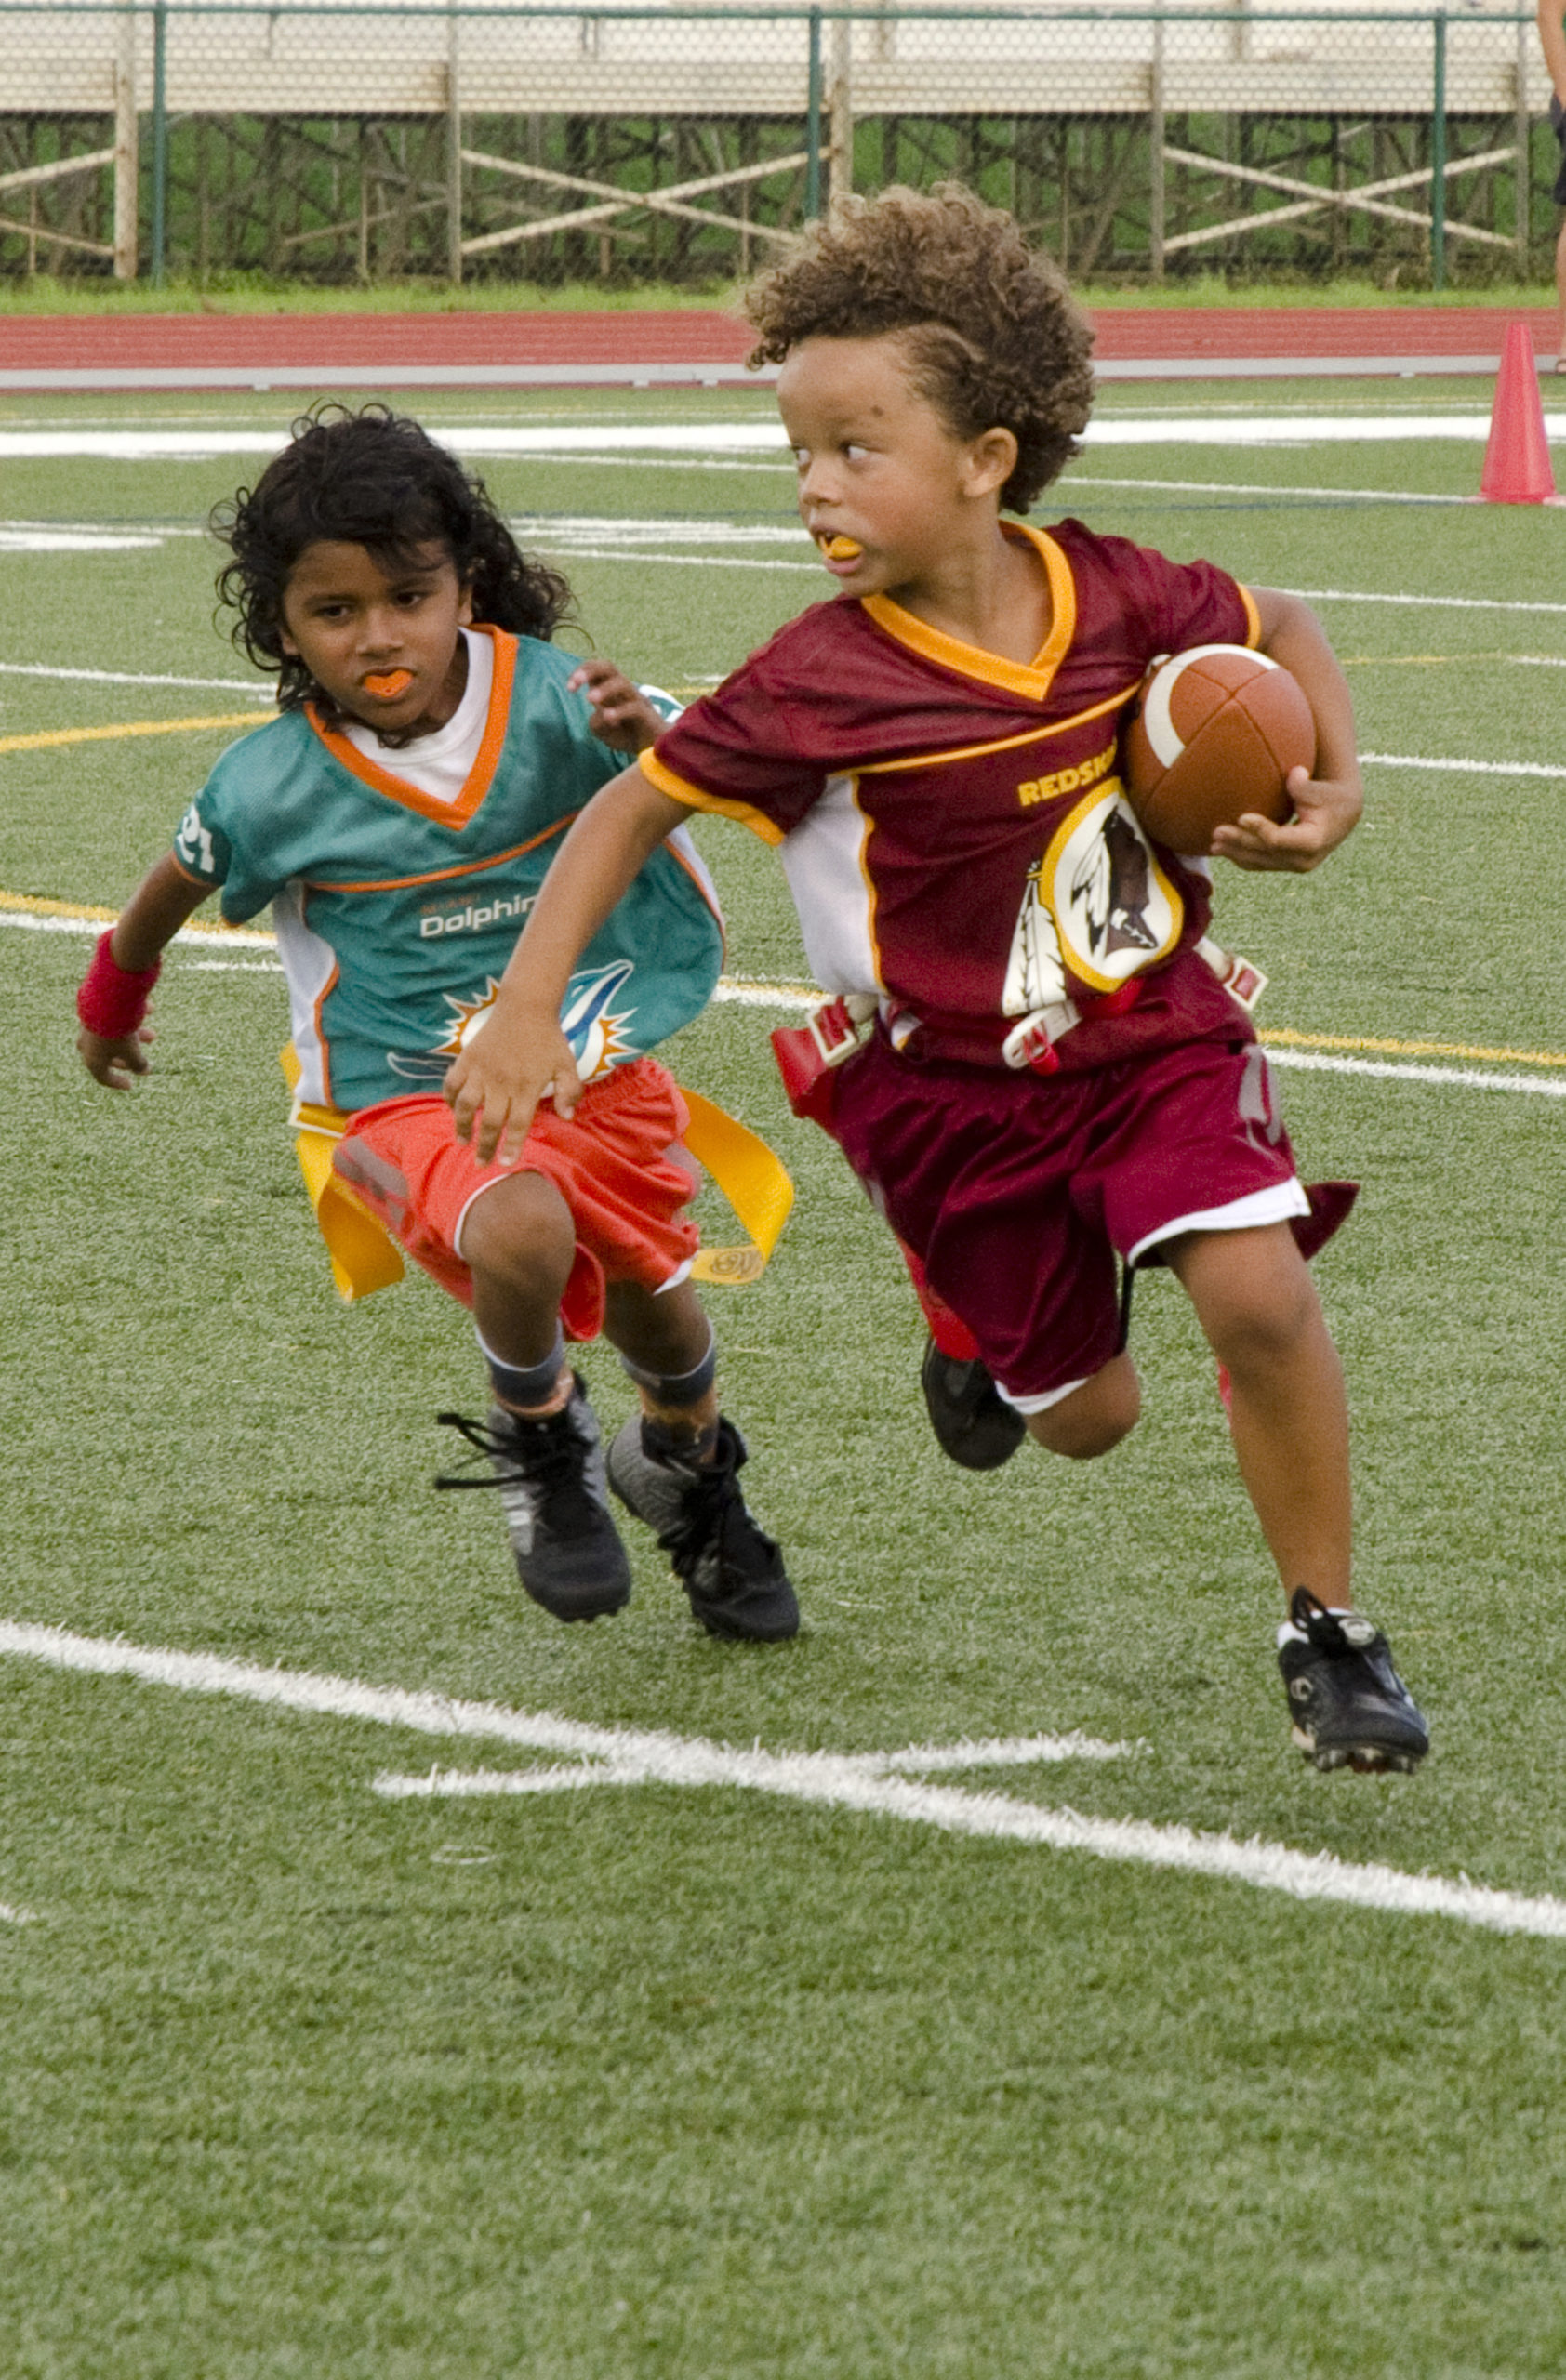 basic-skills-flag-football-drills-for-kids-youth-flag-football-hq